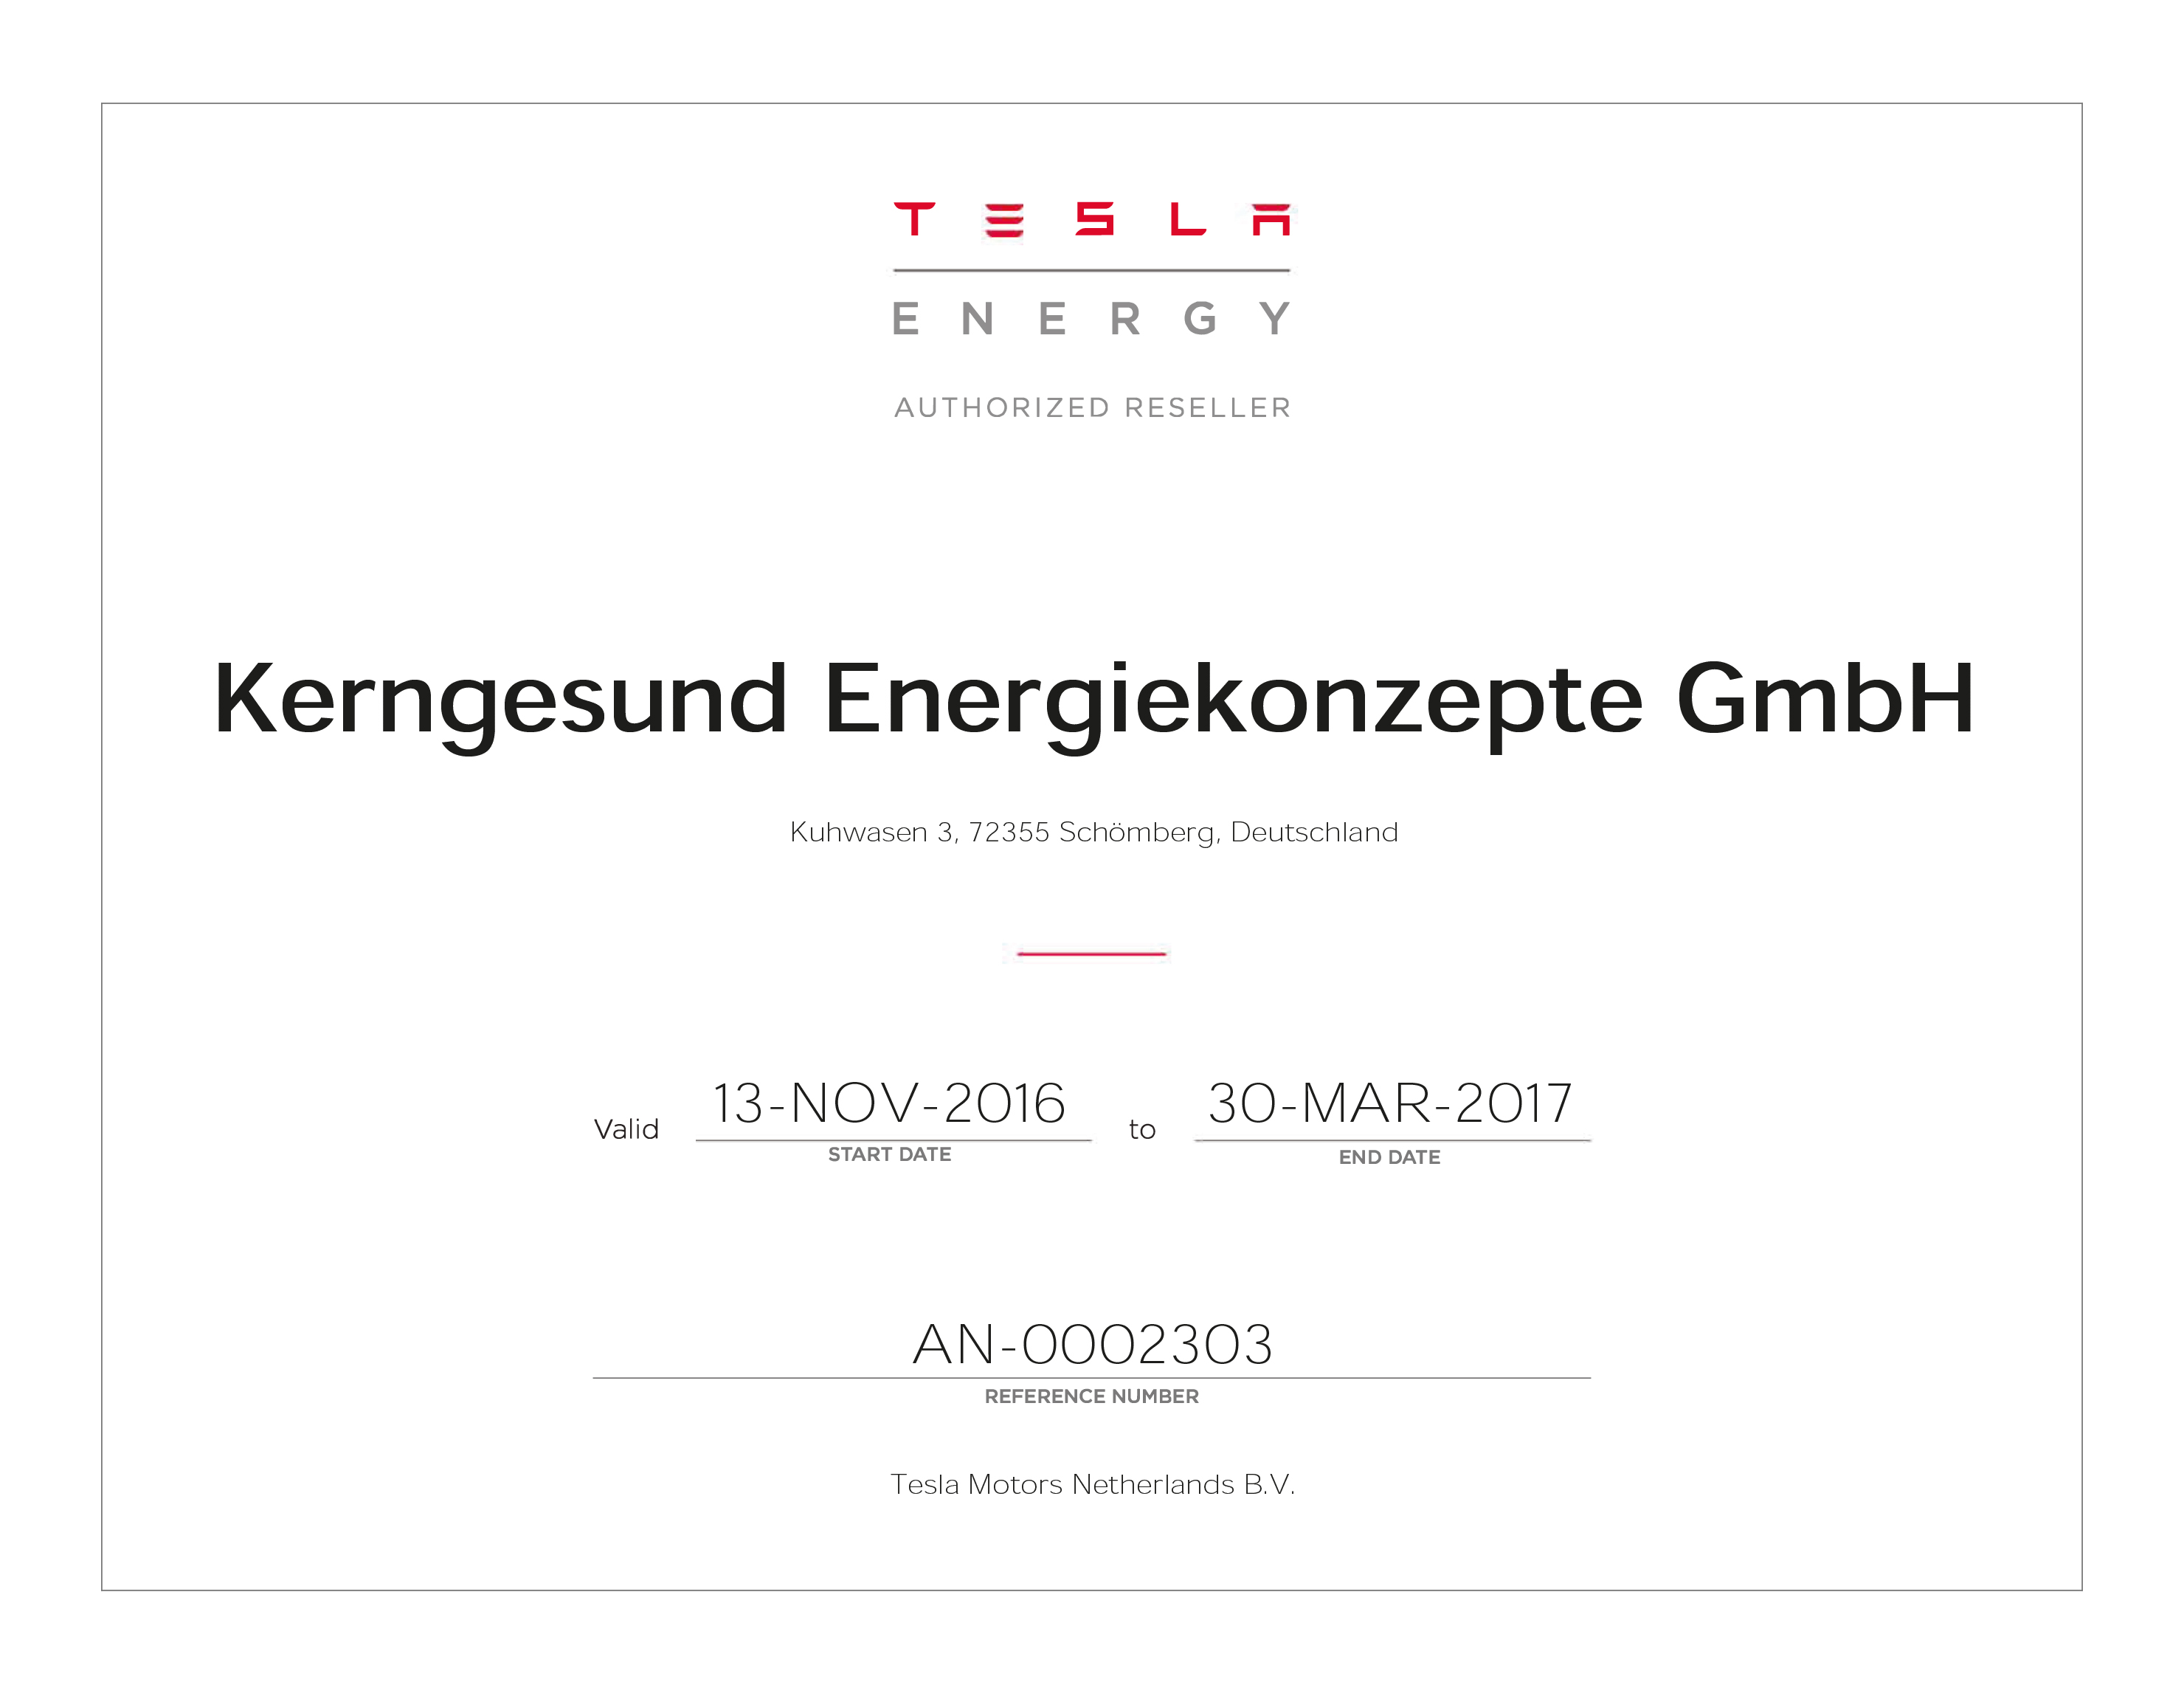 Zertifikat - TESLA ENERGY - AUTHORIZED RESELLER - Kerngesund Energiekonzepte GmbH